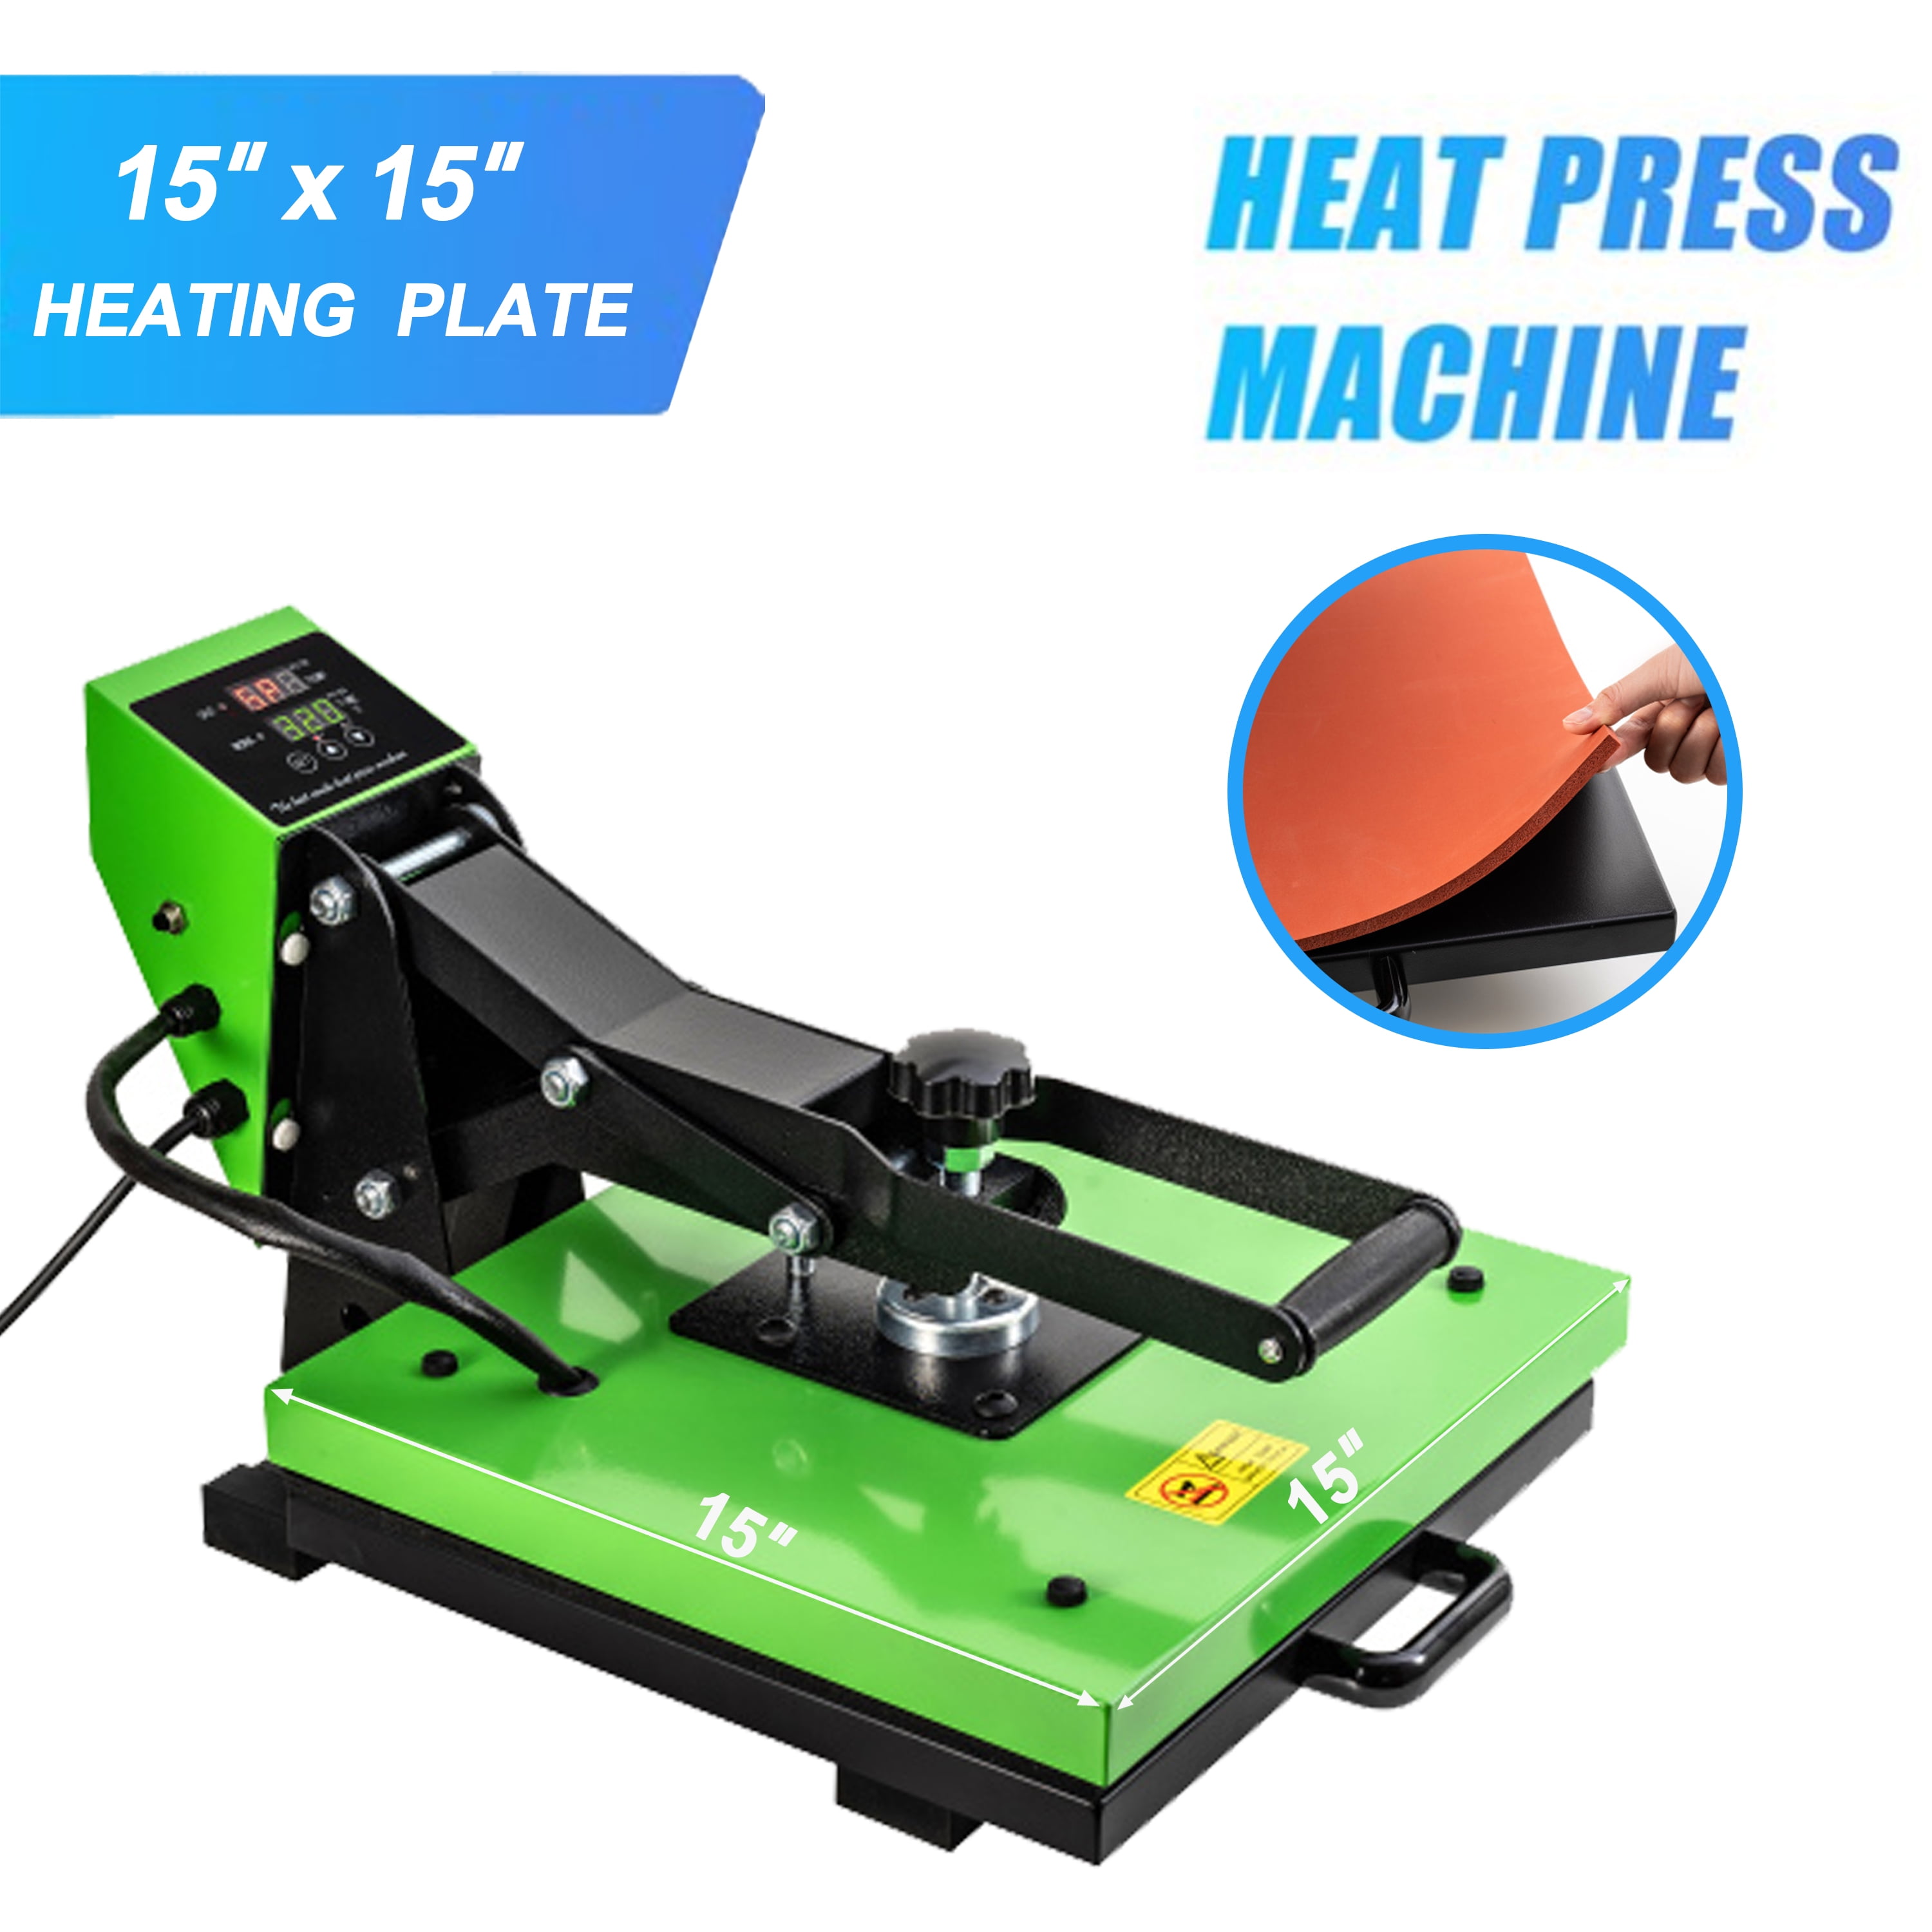 15x15 Heat Press Machine, Aukfa Digital LED Timer Hot Pressing